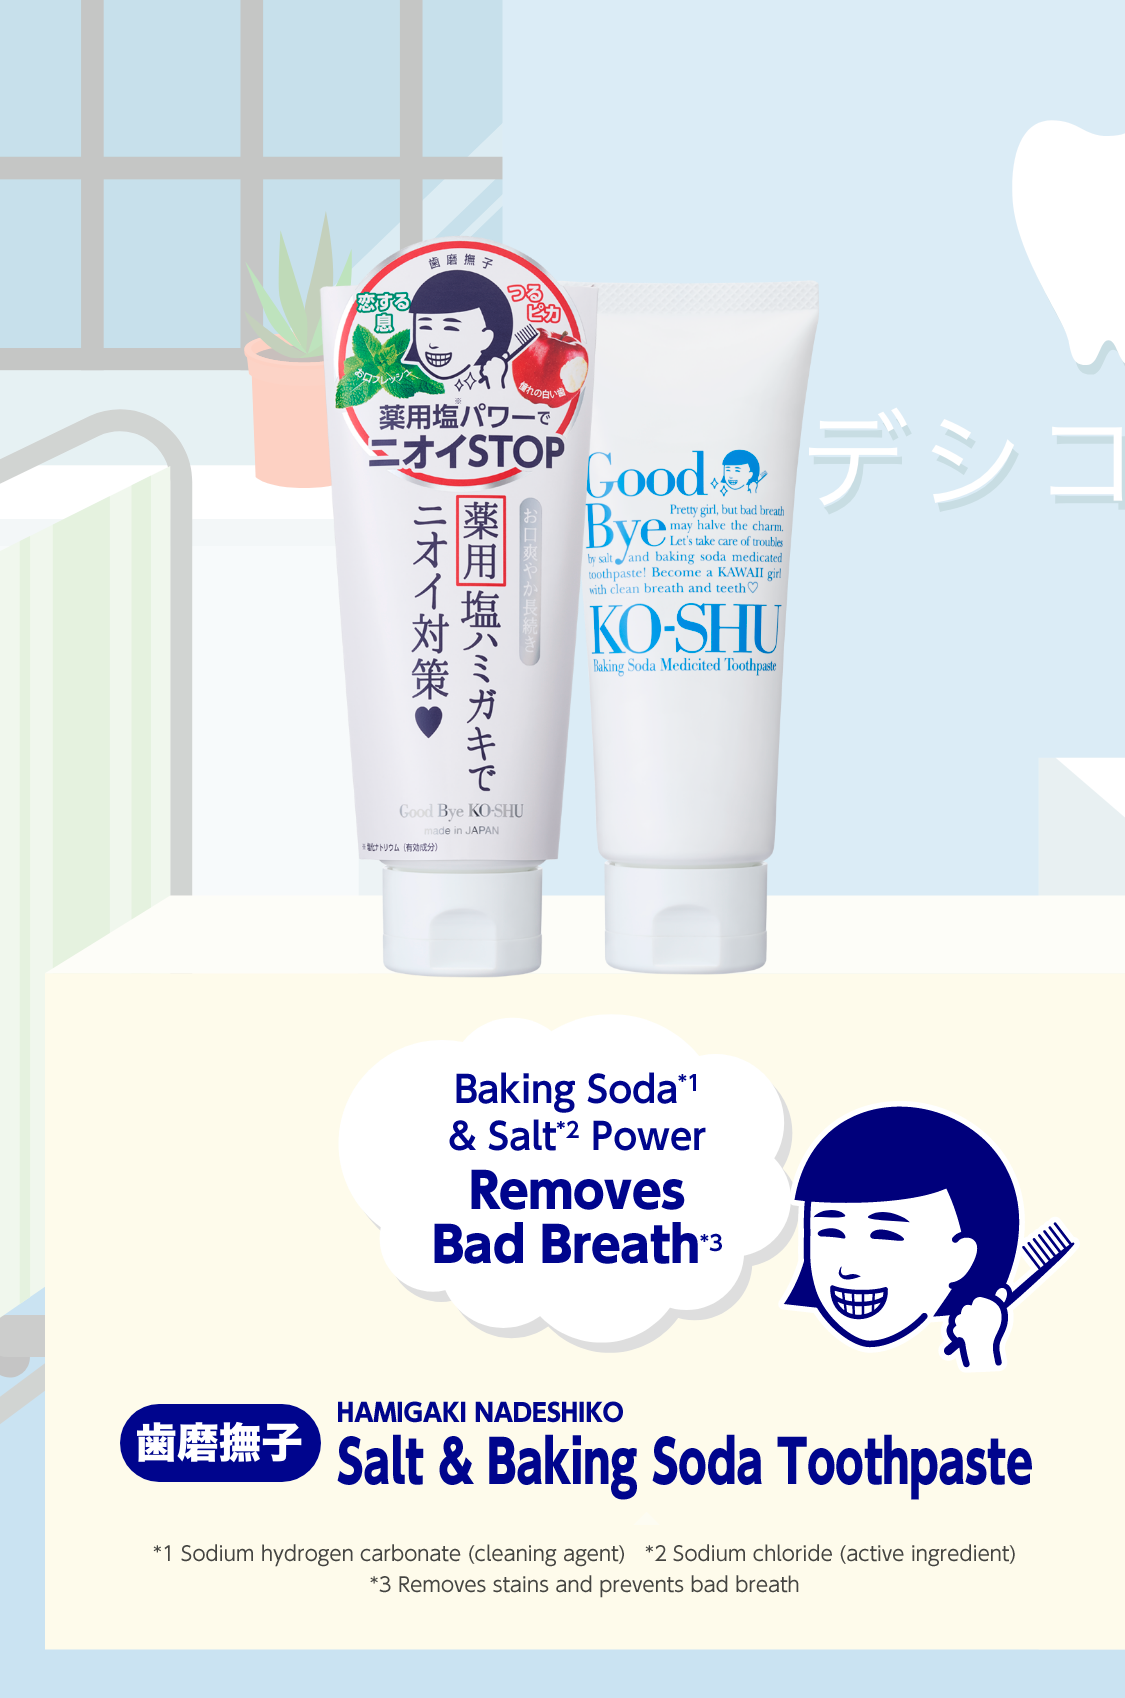 HAMIGAKI NADESHIKO
      Salt & Baking Soda Toothpaste